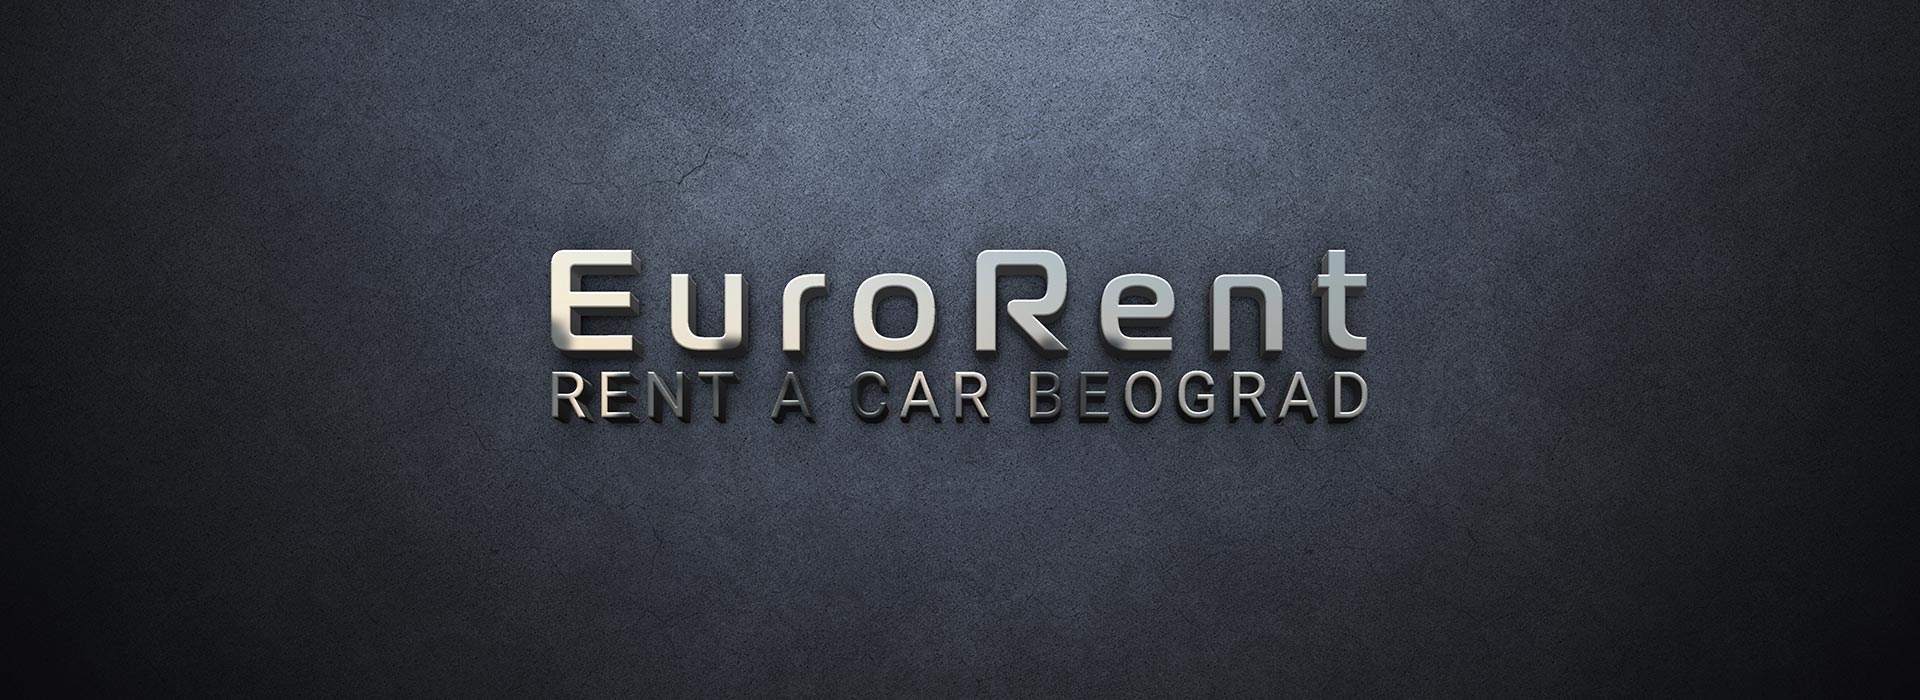 Rent a Car Belgrade Airport | About us